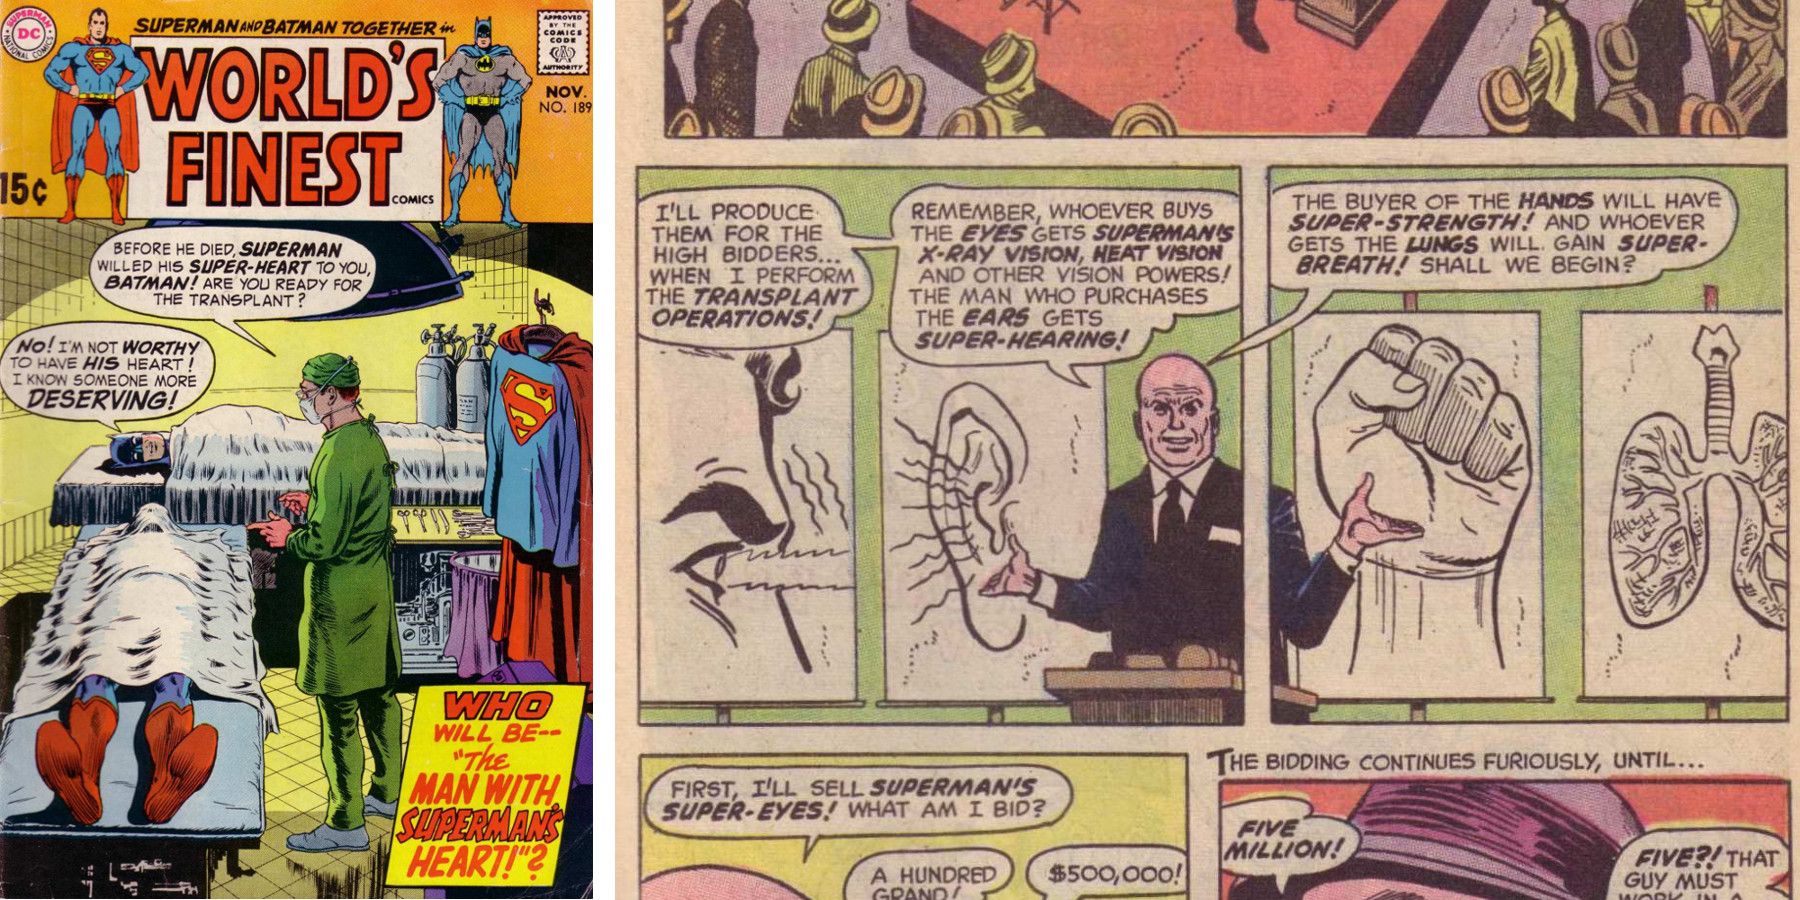 Lex Luthor sells Superman's organs